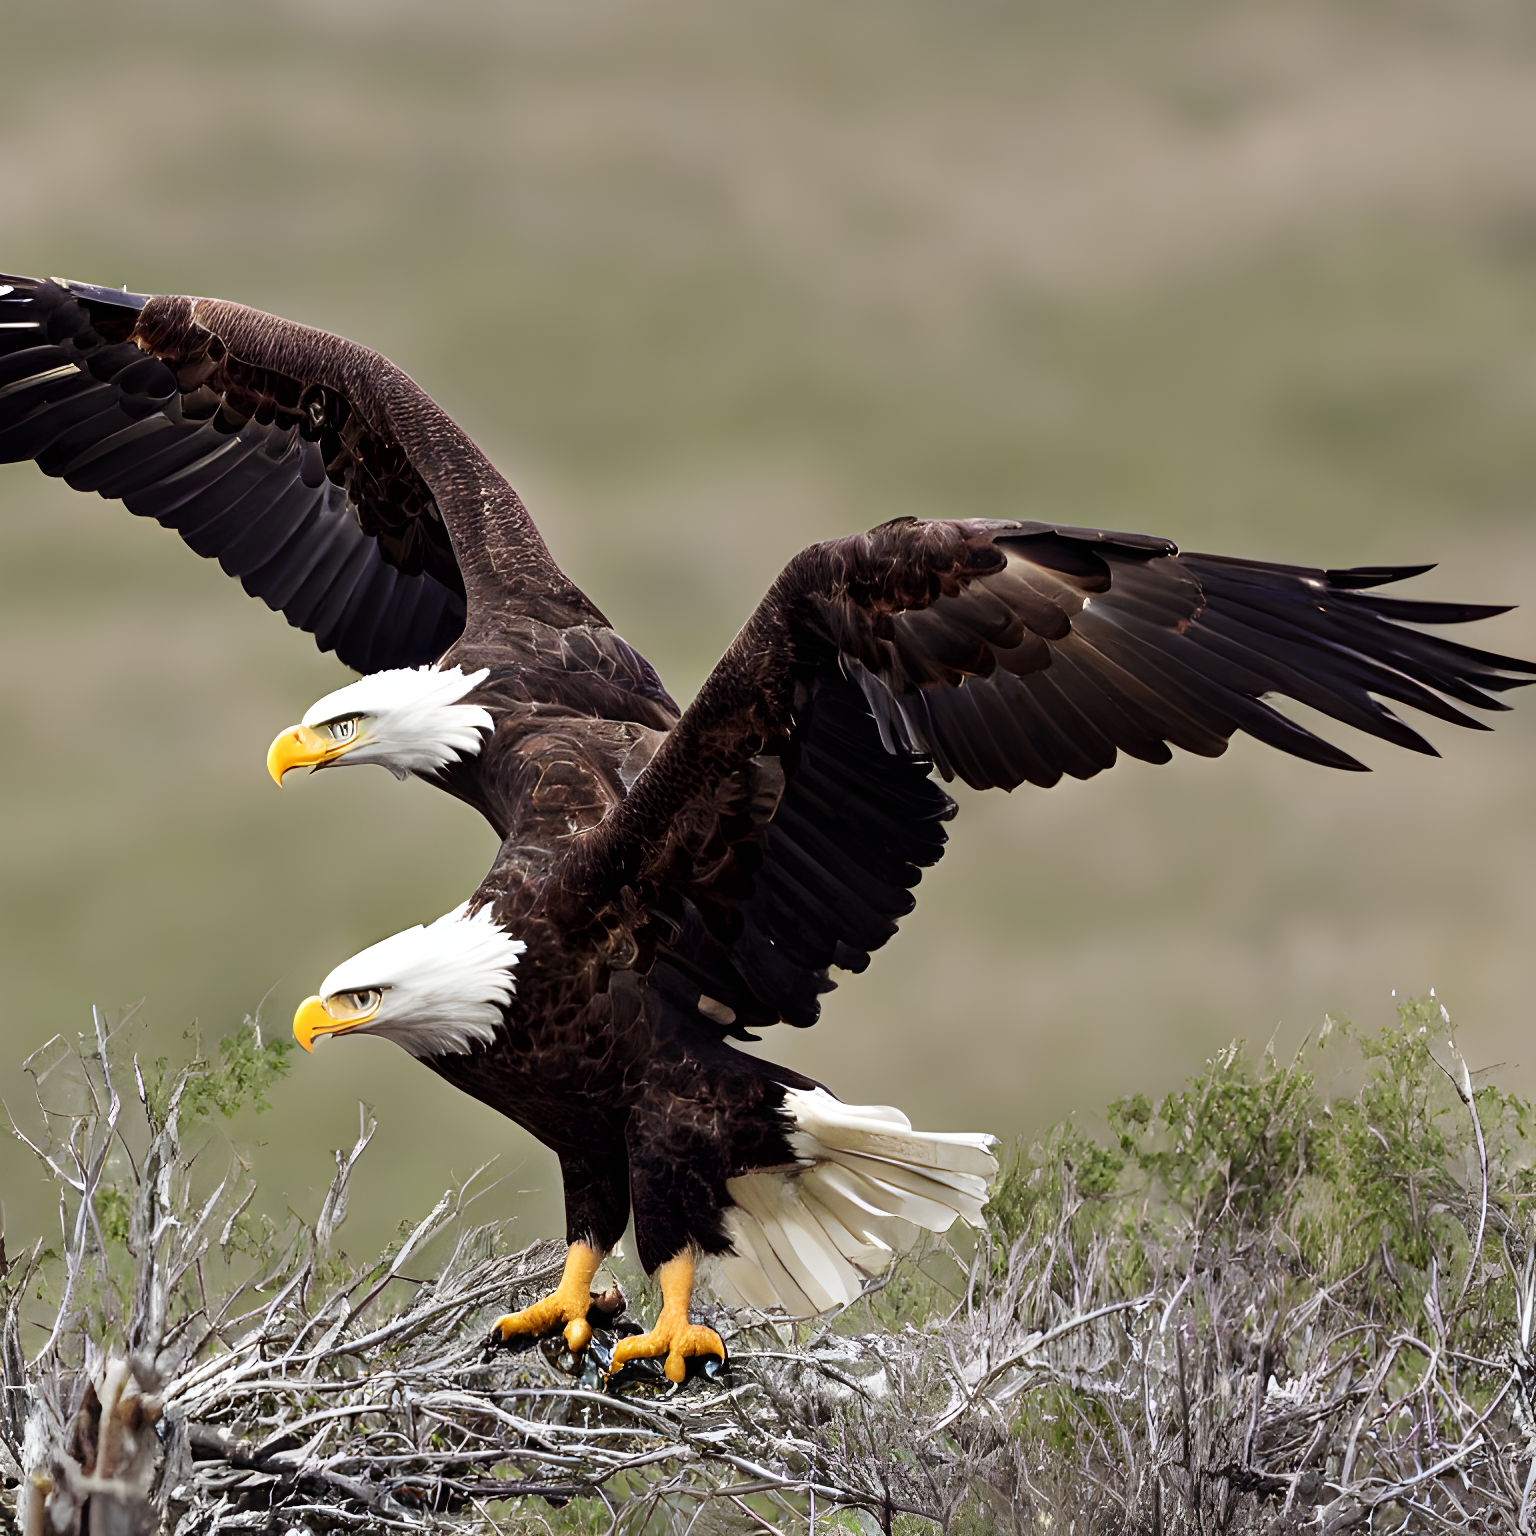 an american bald eagle versus an even bigger eagle